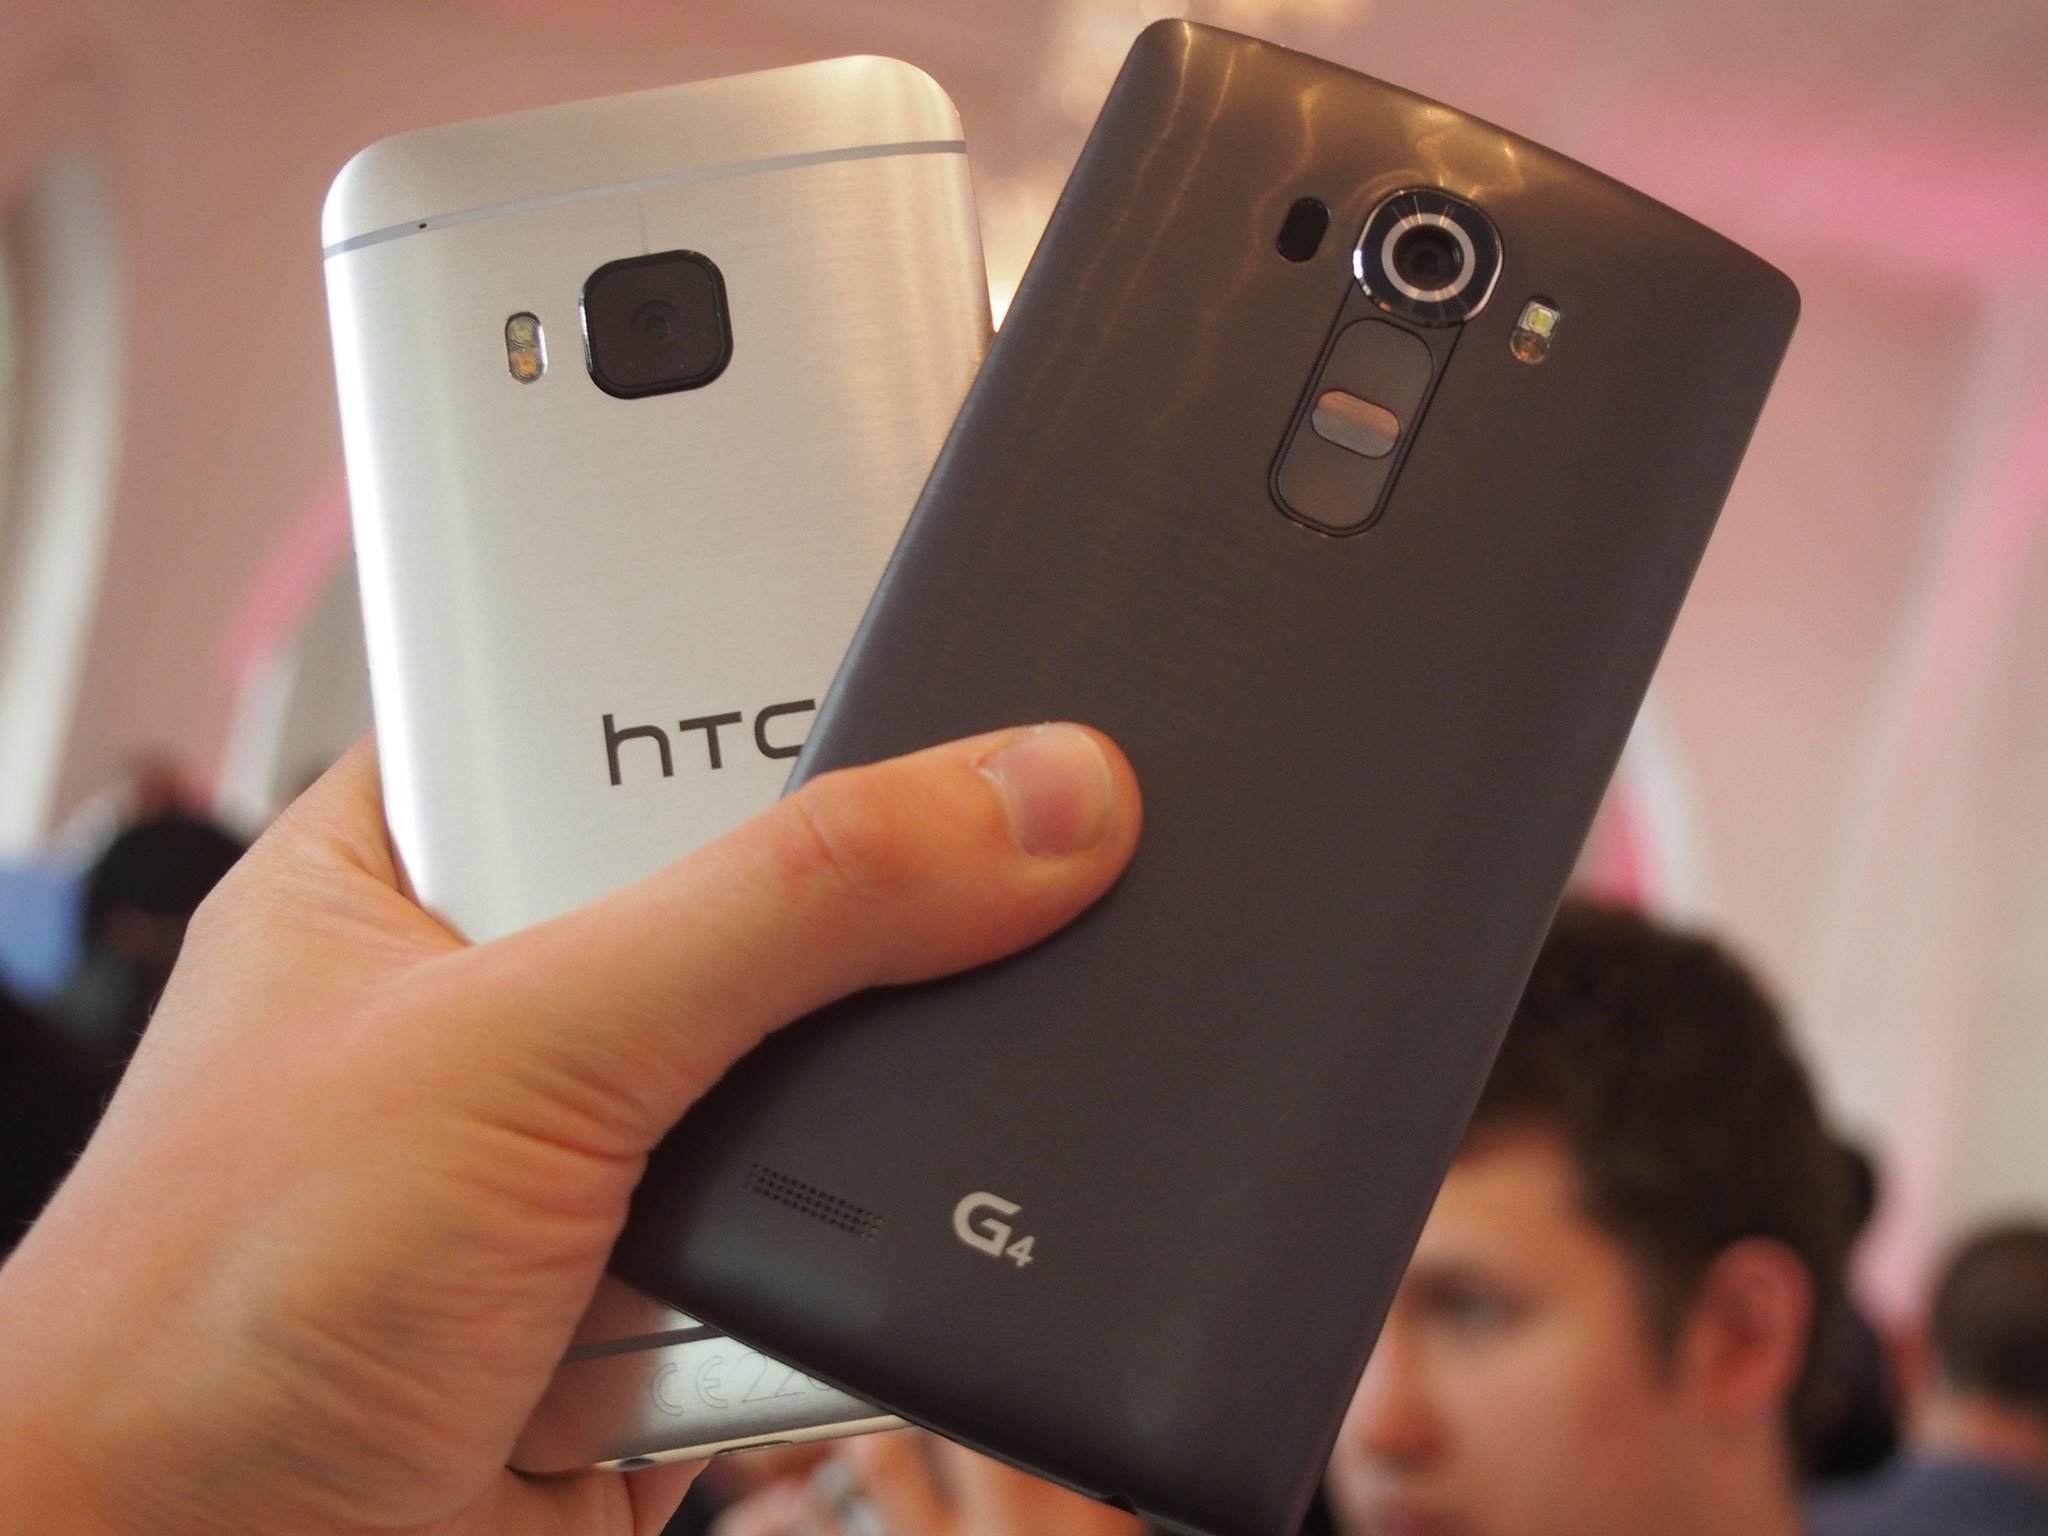 LG G4, HTC One M9